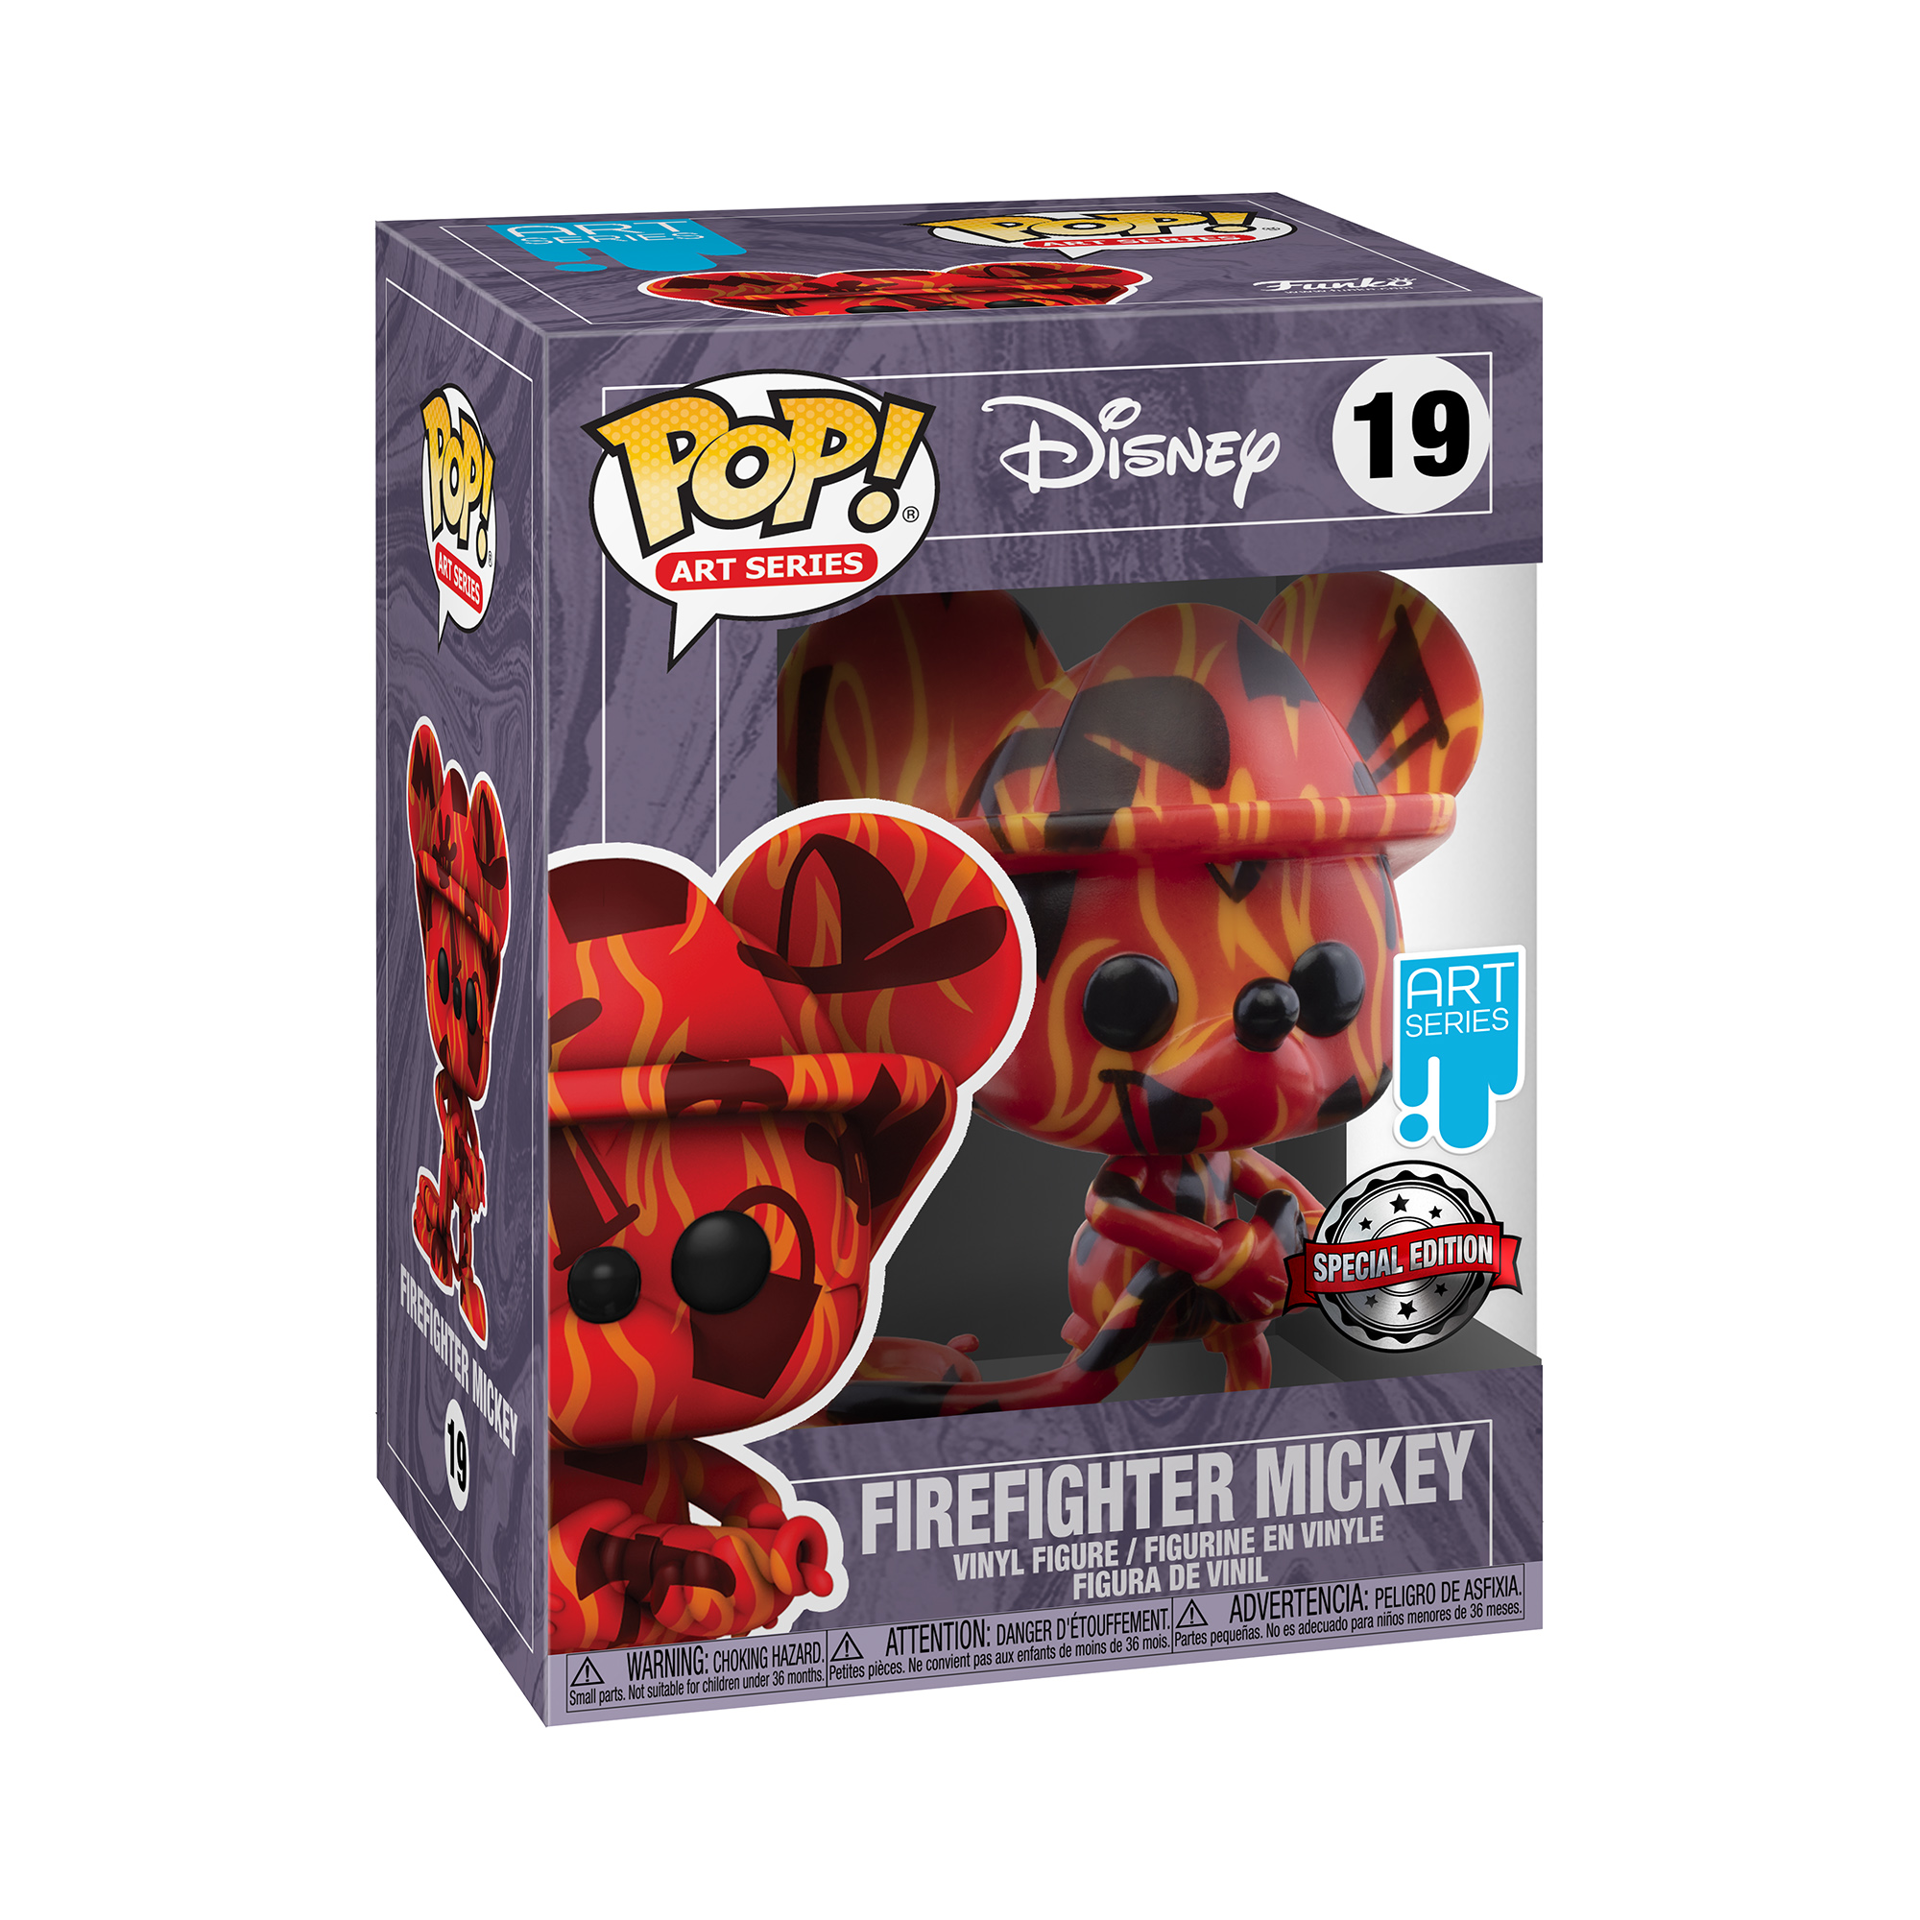 Funko Pop! Art Series: Disney - Firefighter Mickey - US Exclusive